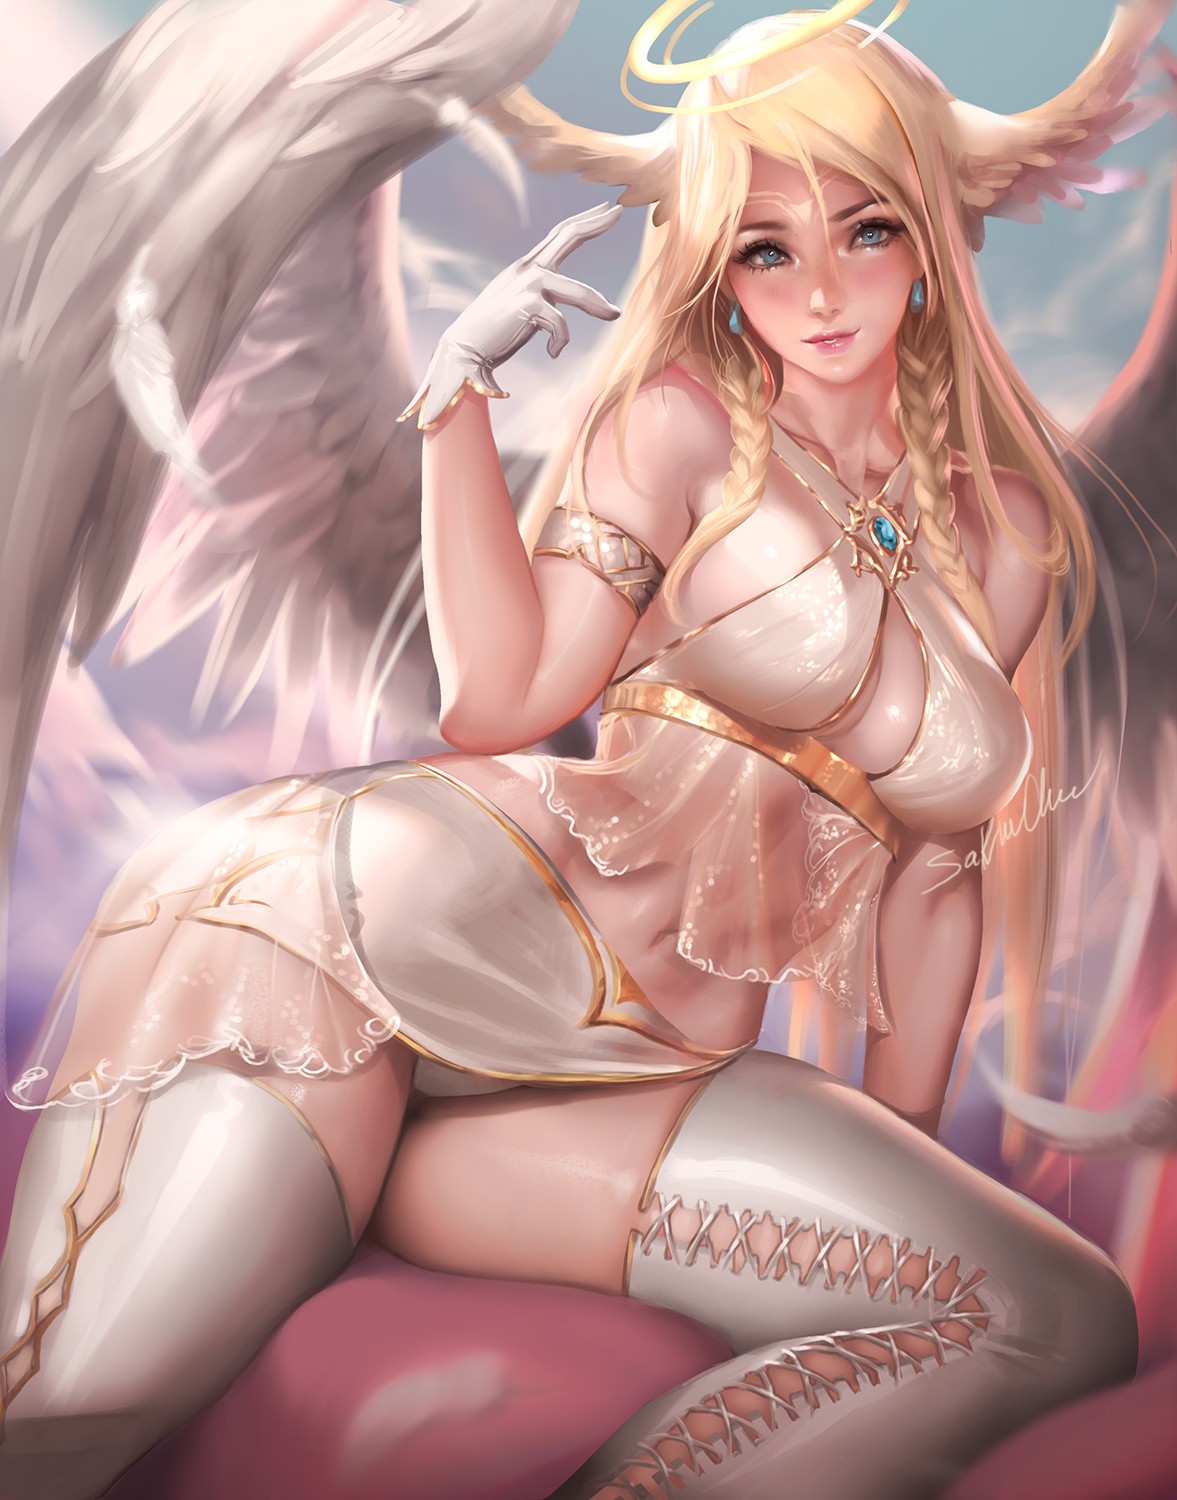 General 1177x1500 Sakimichan big boobs curvy wings fantasy girl women boobs fantasy art thighs legs blonde stockings gloves angel